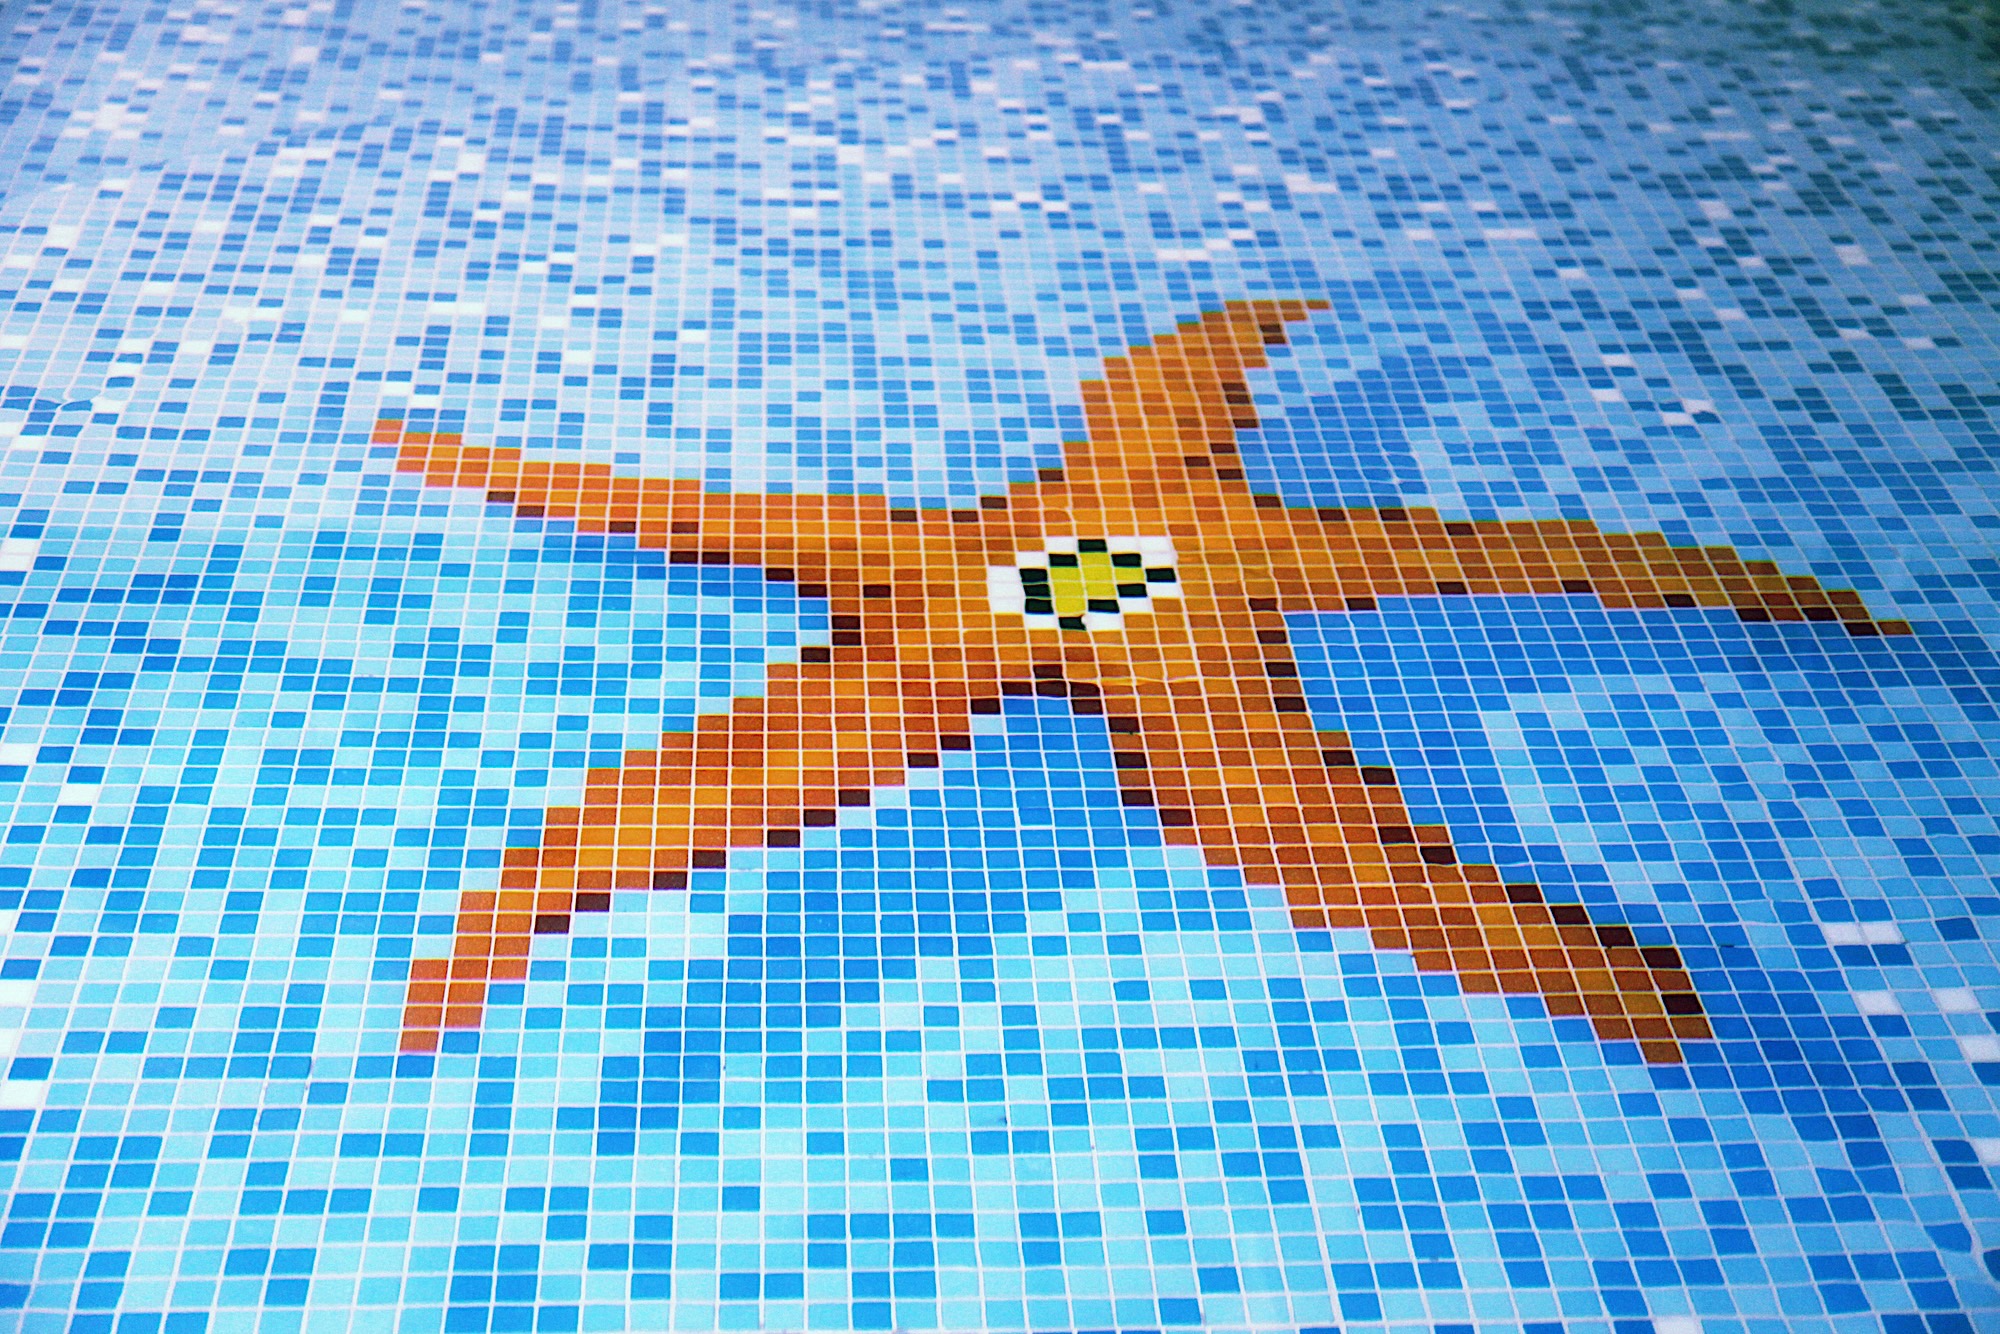 tiled pool designs